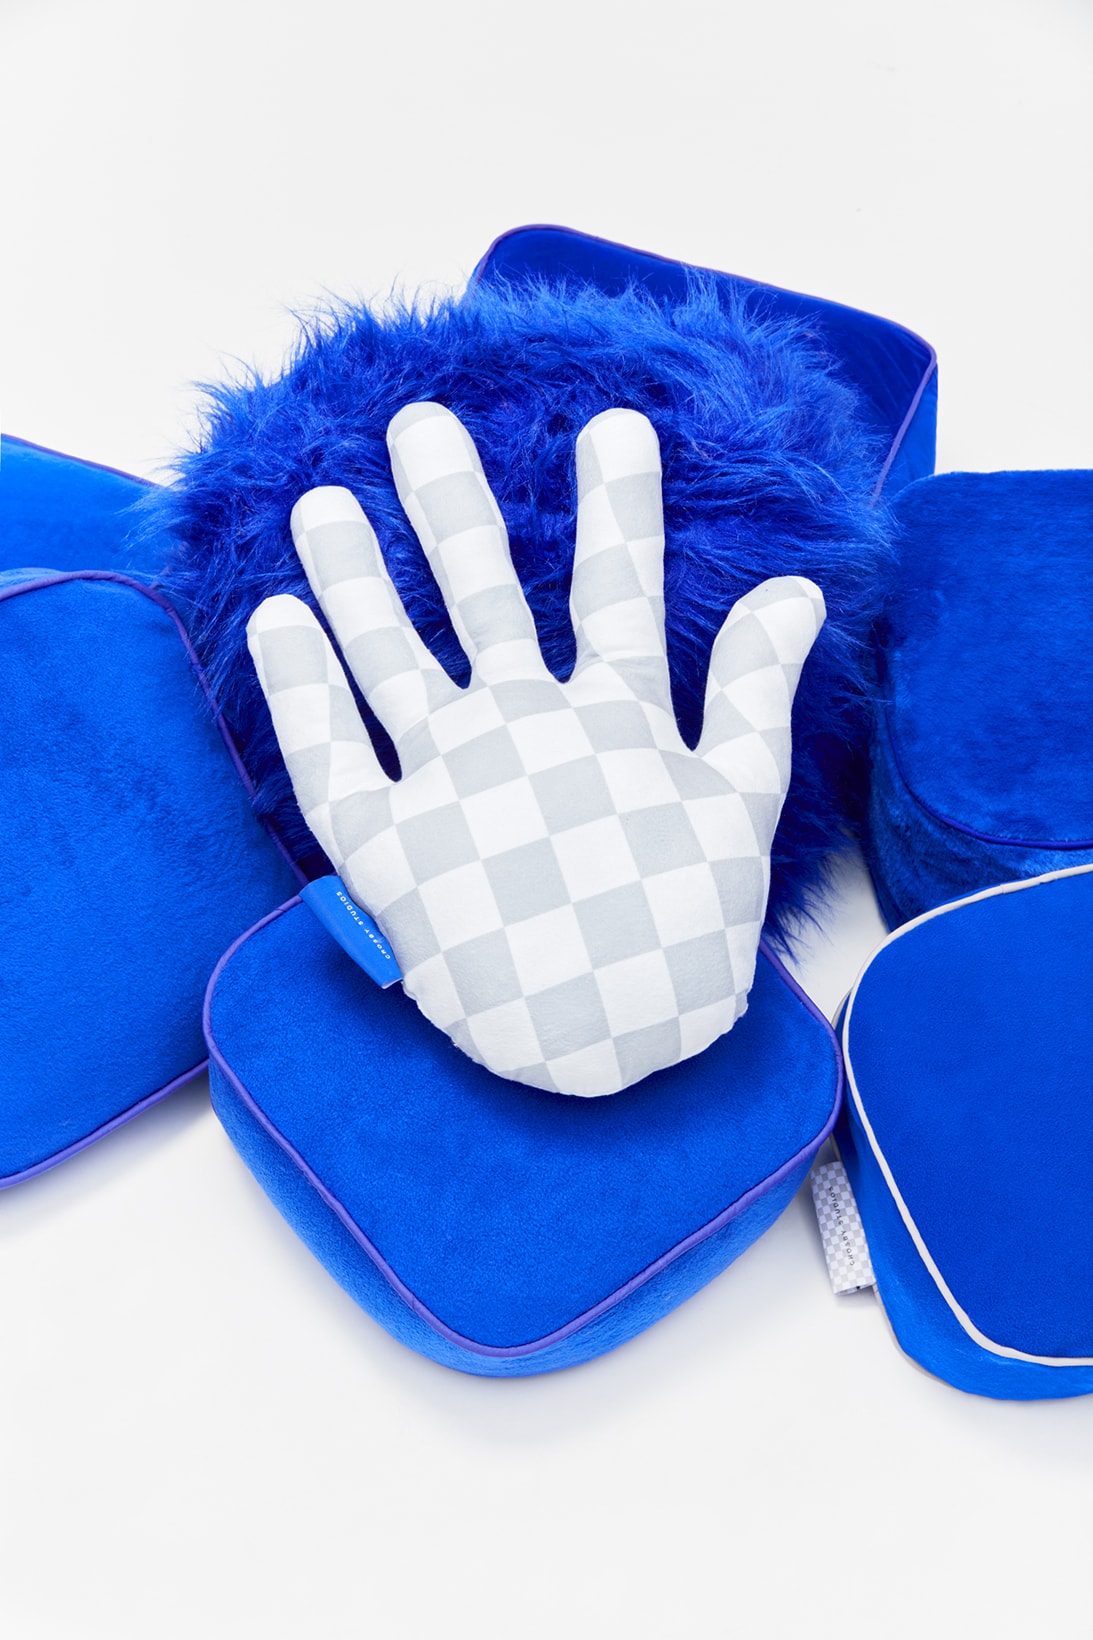 crosby studios homeware collection hbx pillows hand gray blue fleece fur